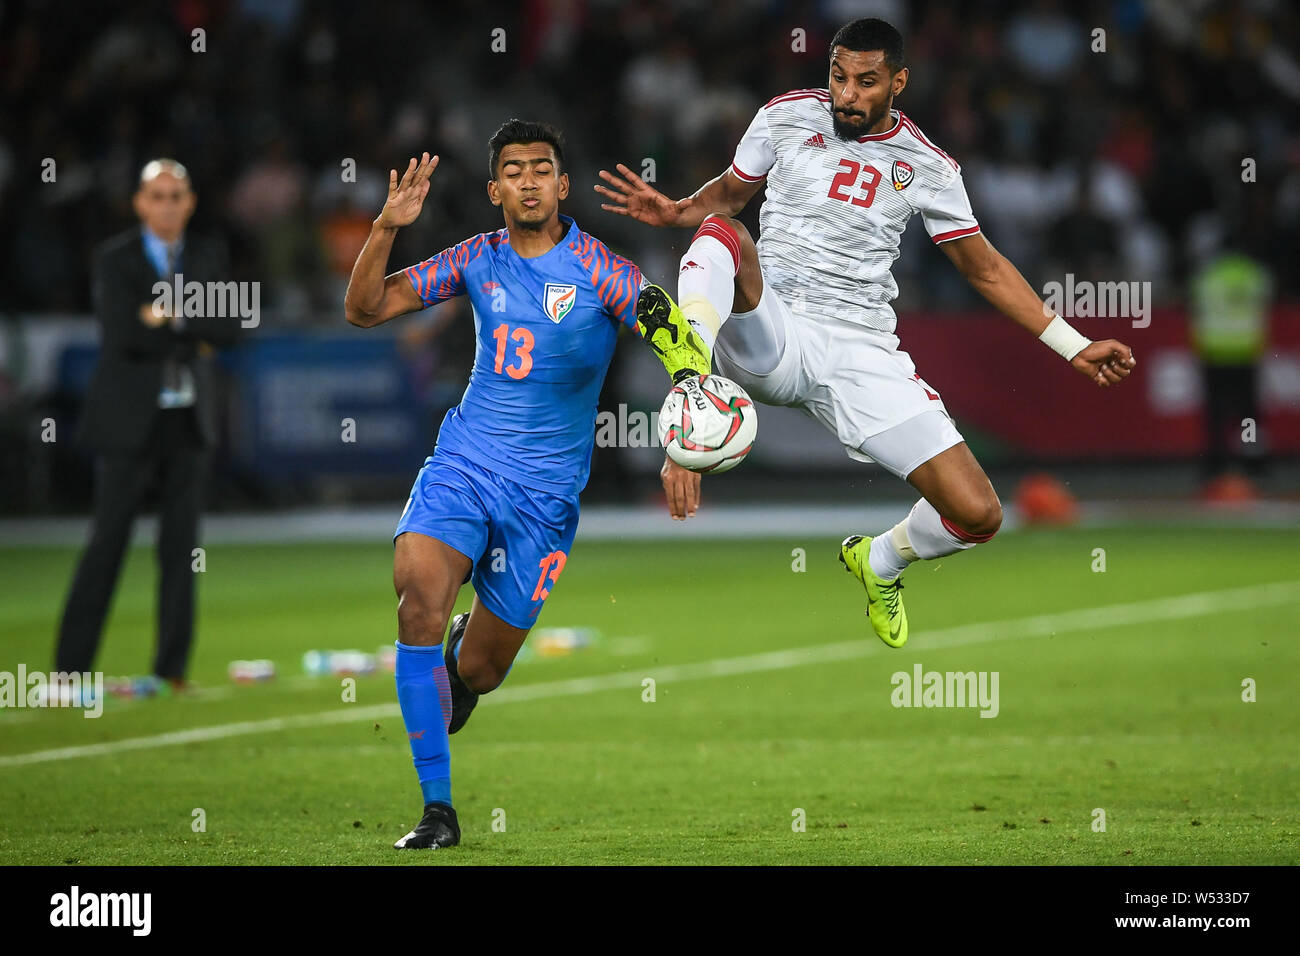 Mohamed Ahmed, rechts, der Vereinigten Arabischen Emirate National Football Team den Ball gegen Ashique Kuruniyan von Indien National Football Team in der Stockfoto